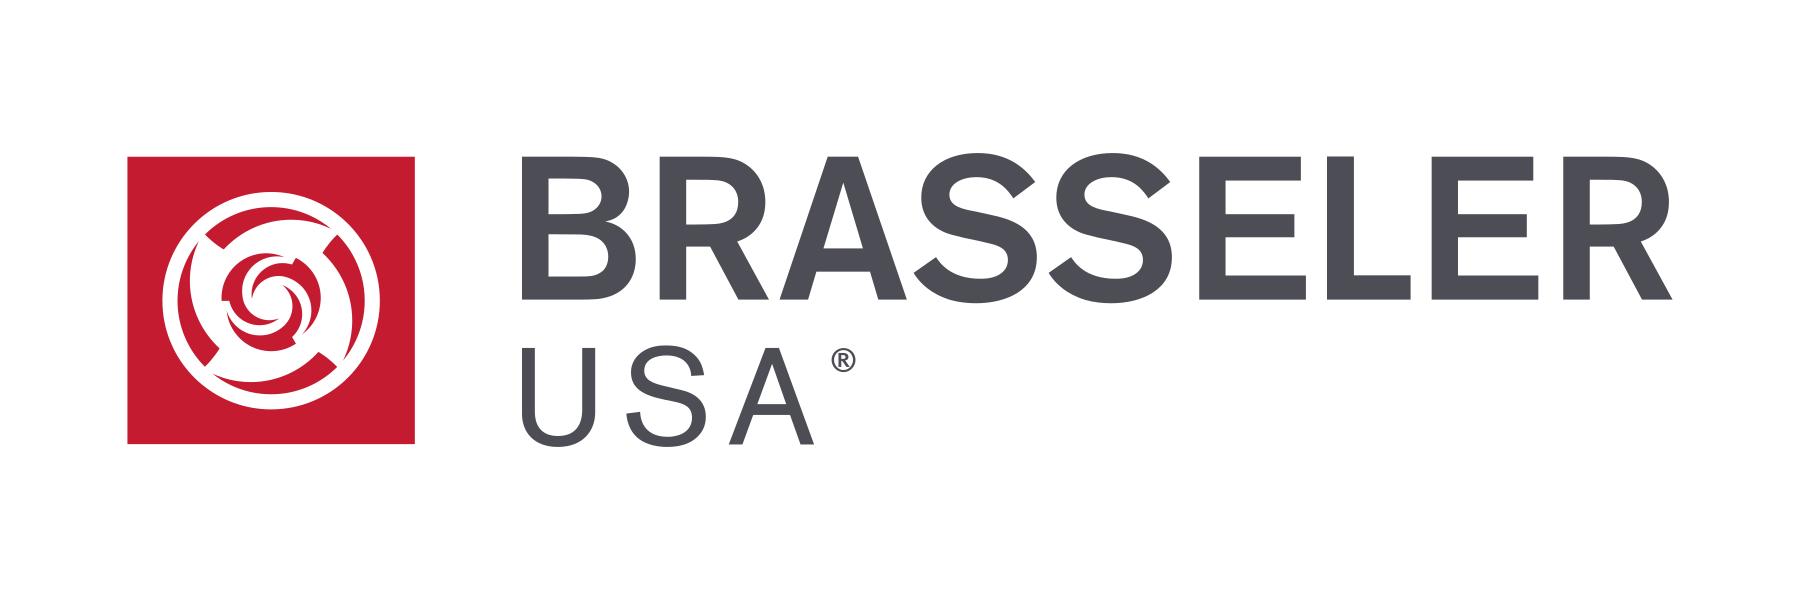 Brasseler USA